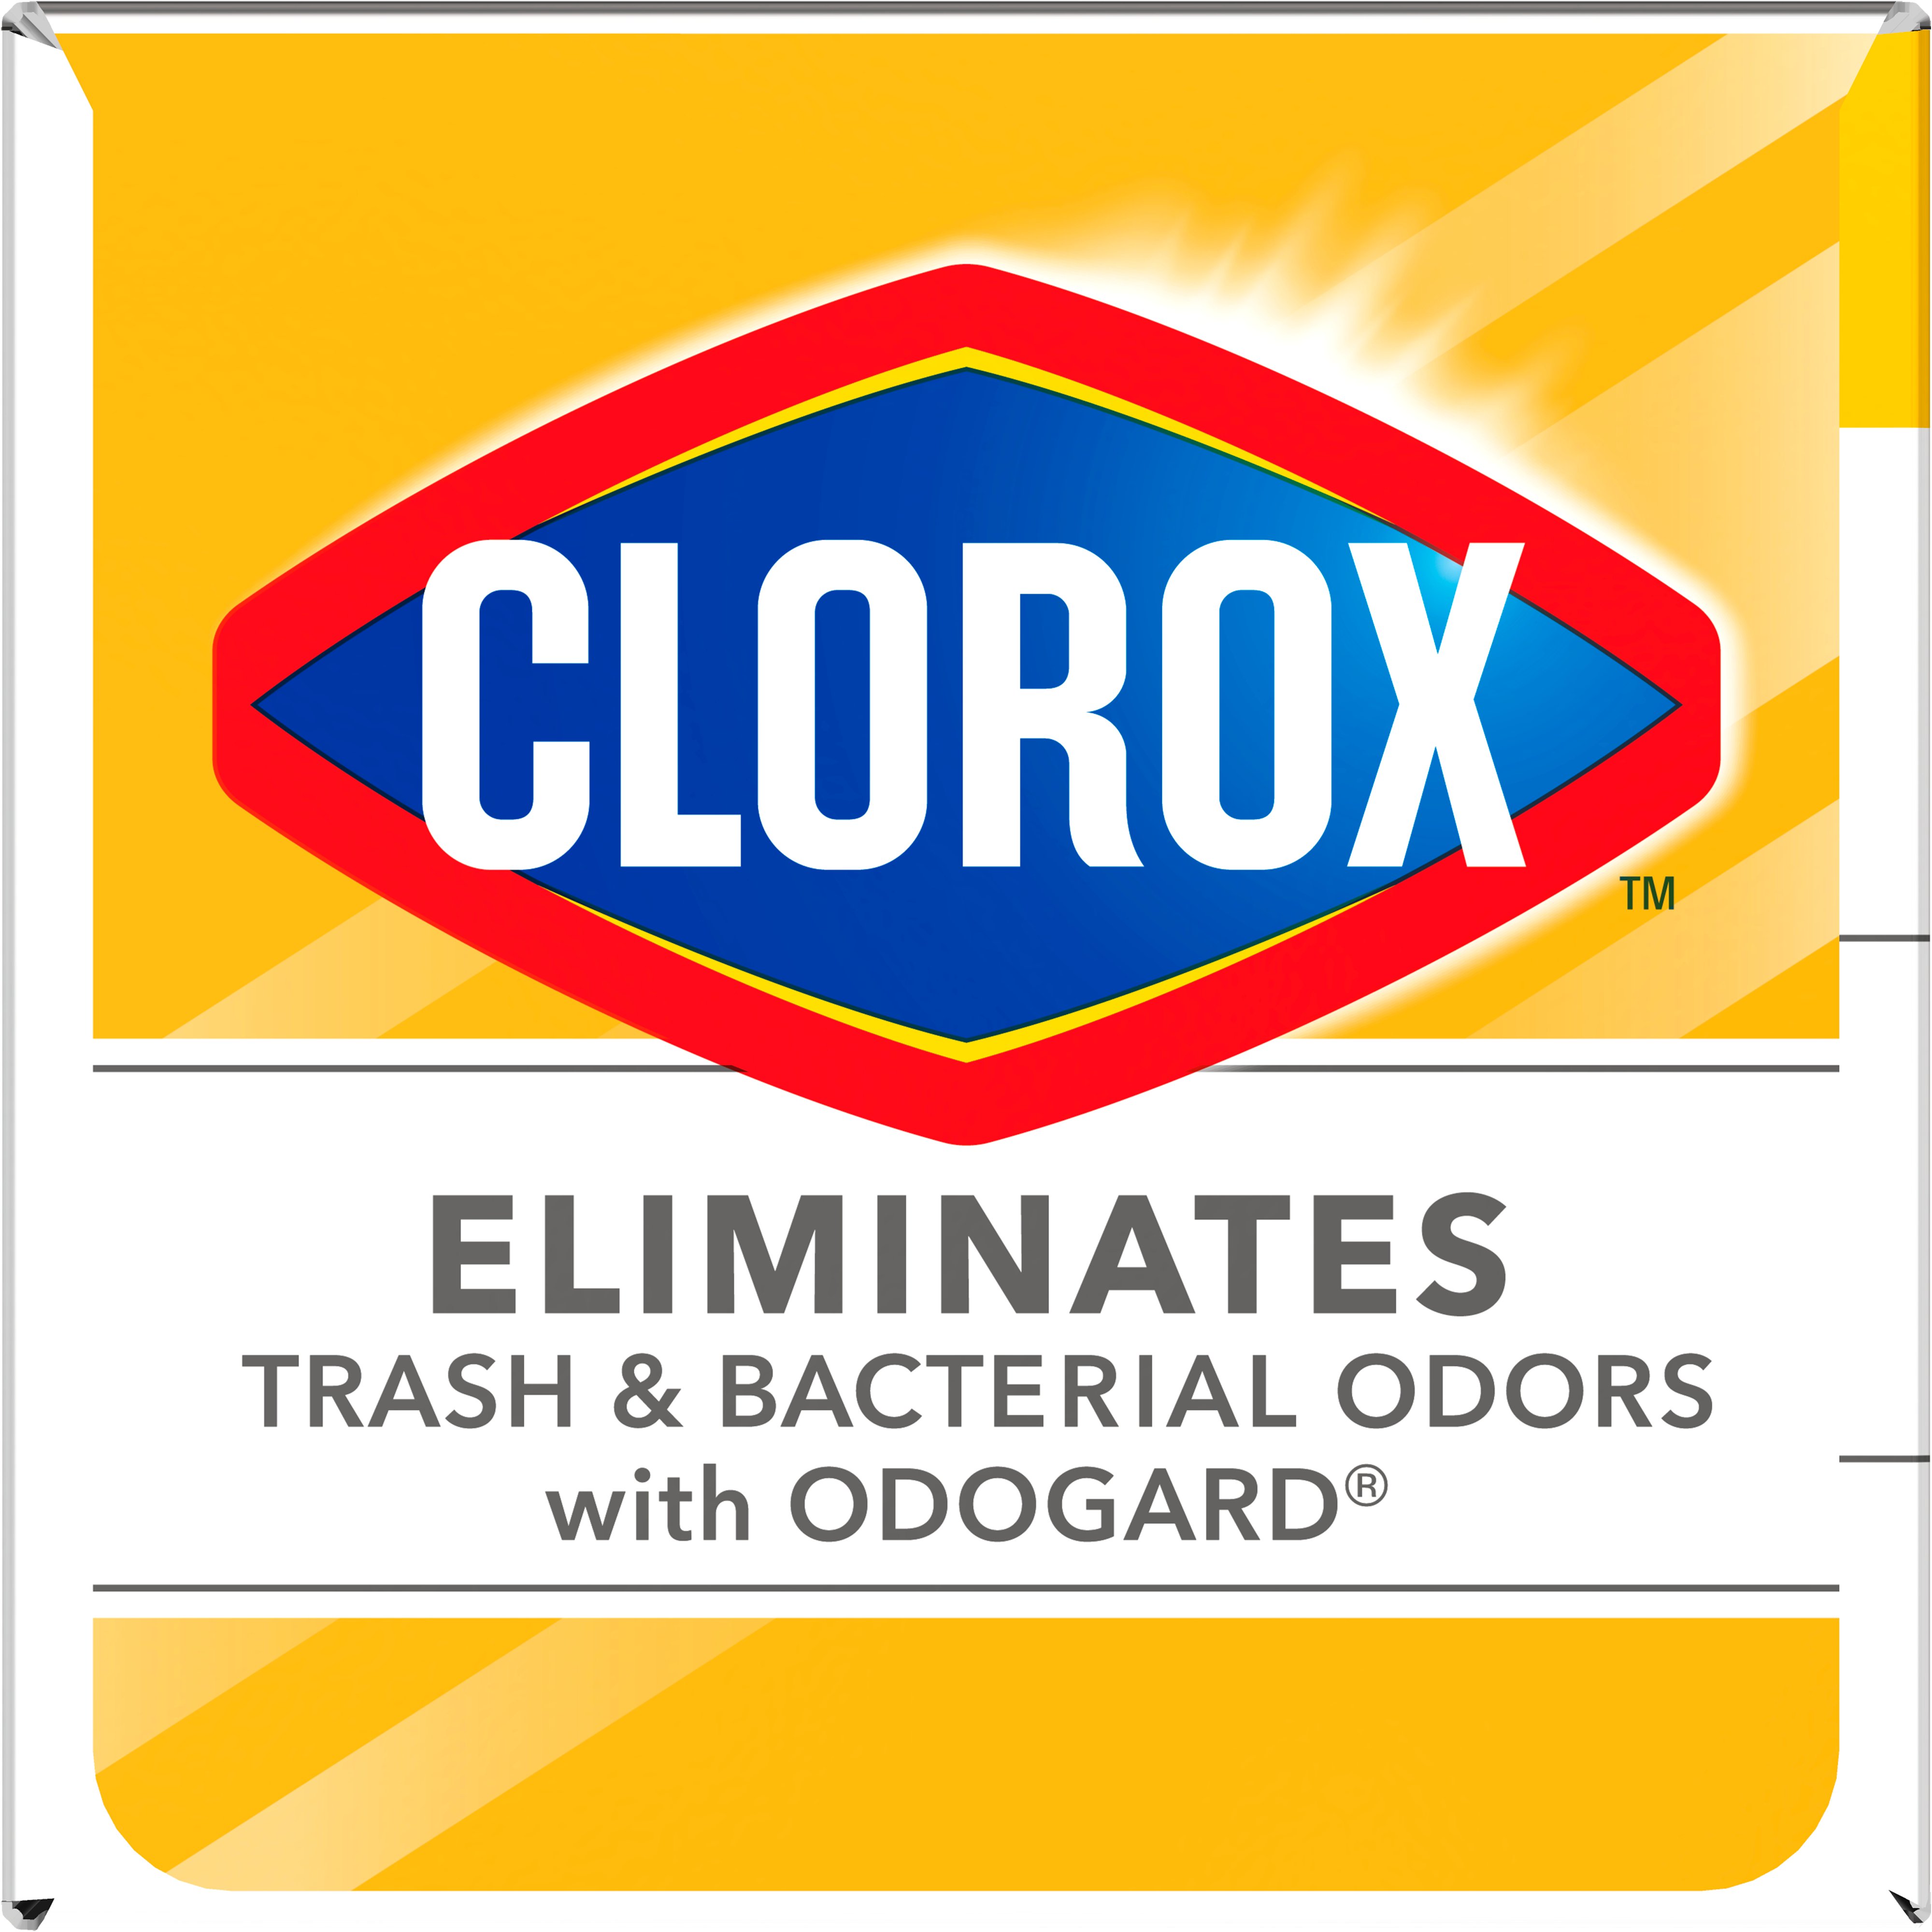 Glad Small Drawstring Trash Bags with Clorox, 4 Gallon, Lemon Fresh Bleach Scent - 20 ct